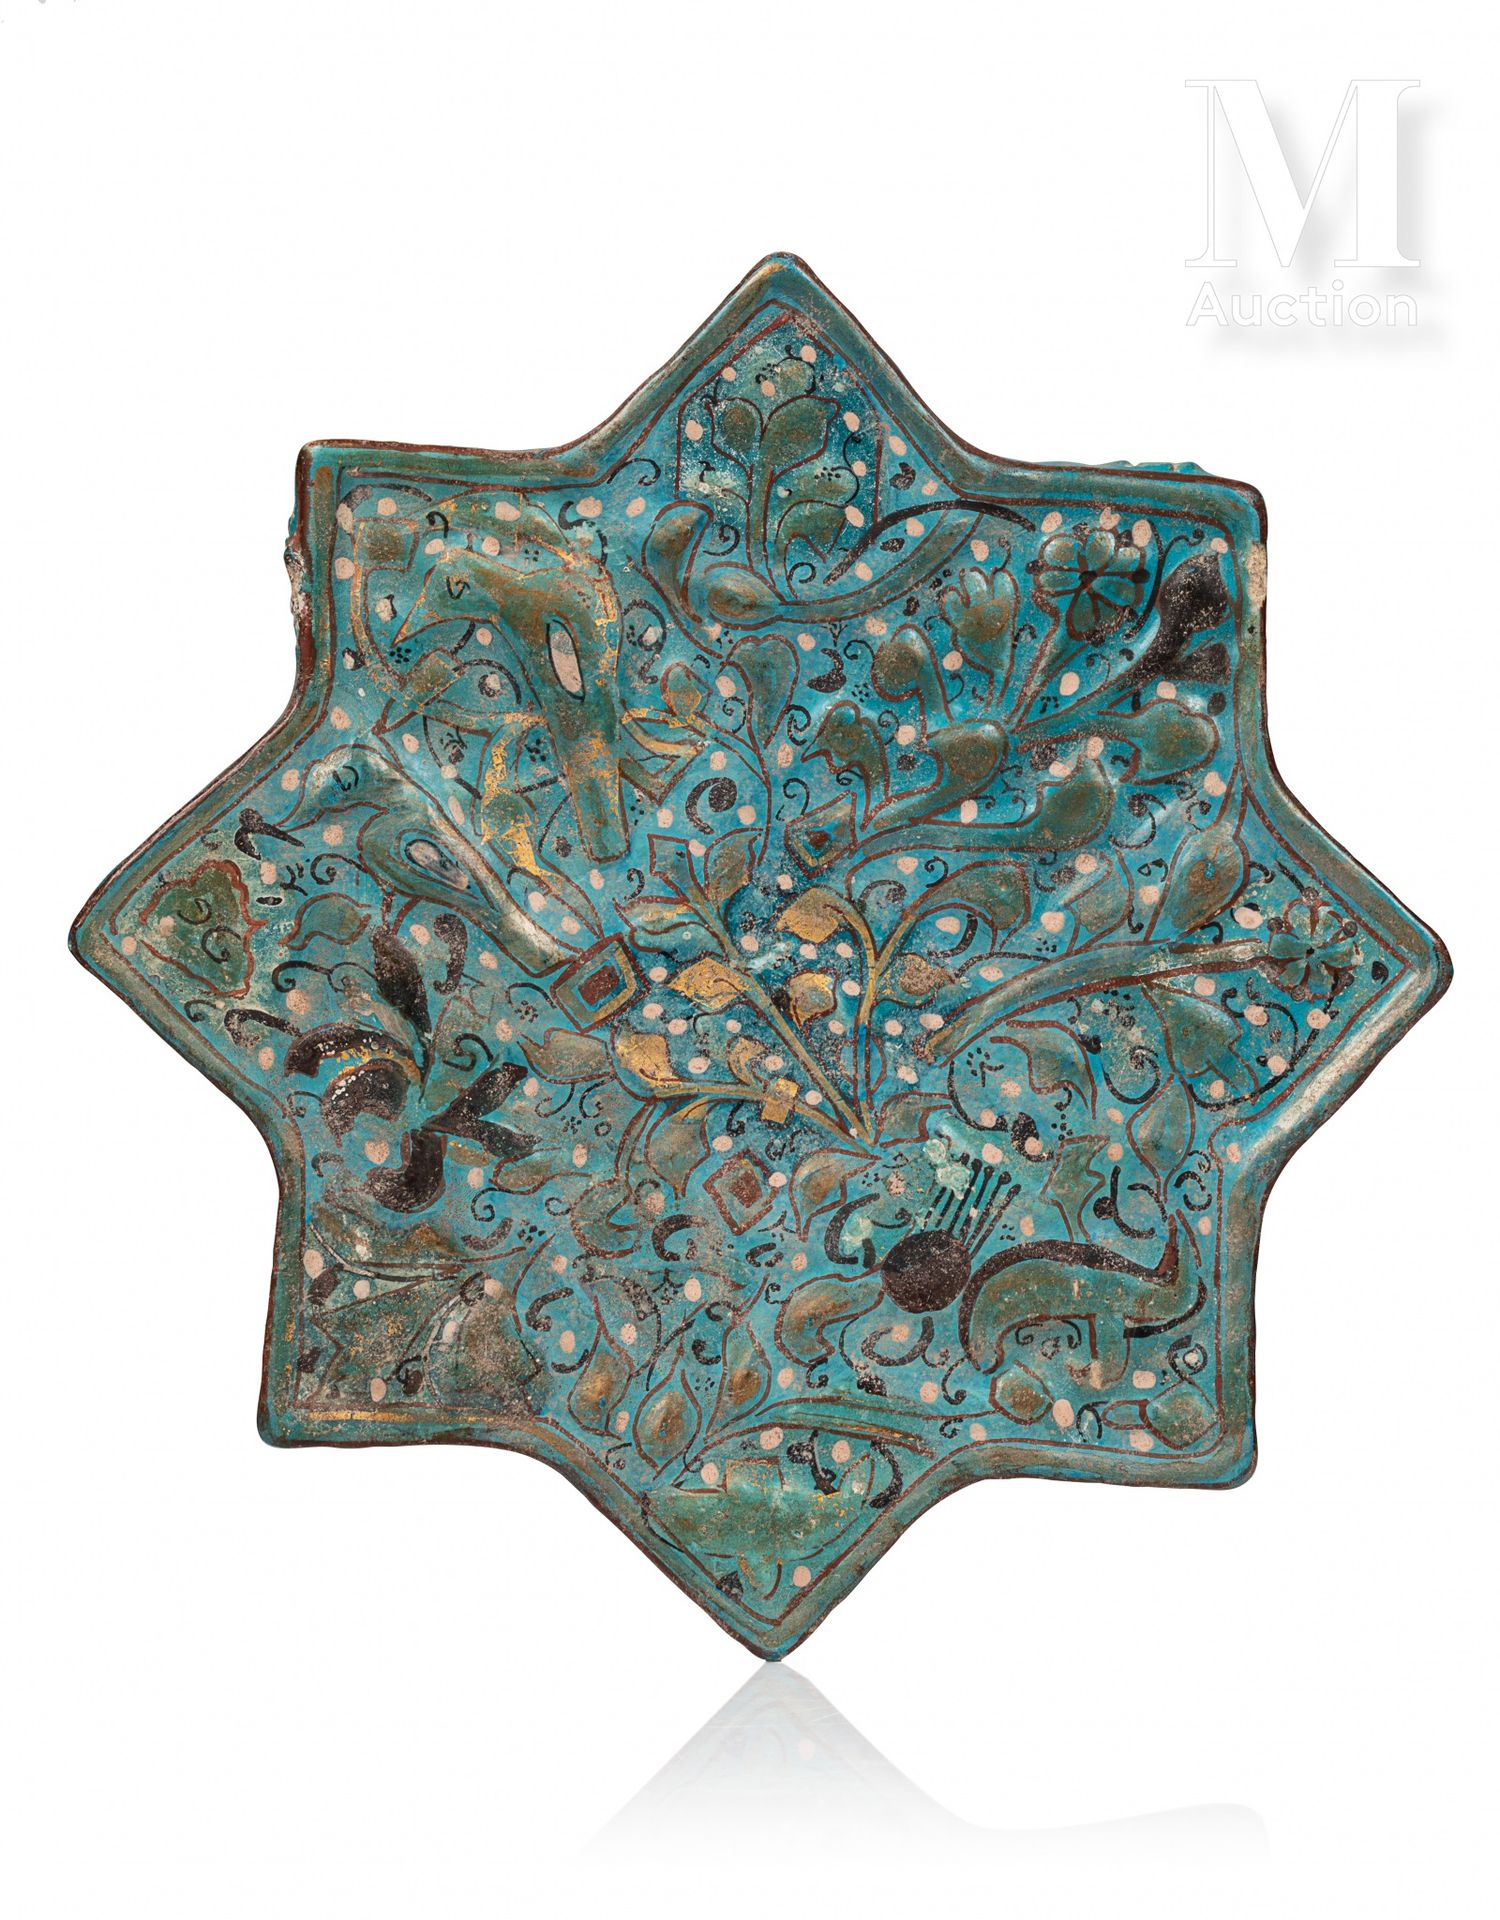 Etoile de type Lajvard aux oiseaux 伊朗，卡尚，伊尔汗国艺术，约1300年

八角拉瓦德型硅质泥面砖，有轻浮雕装饰，周围有红线&hellip;